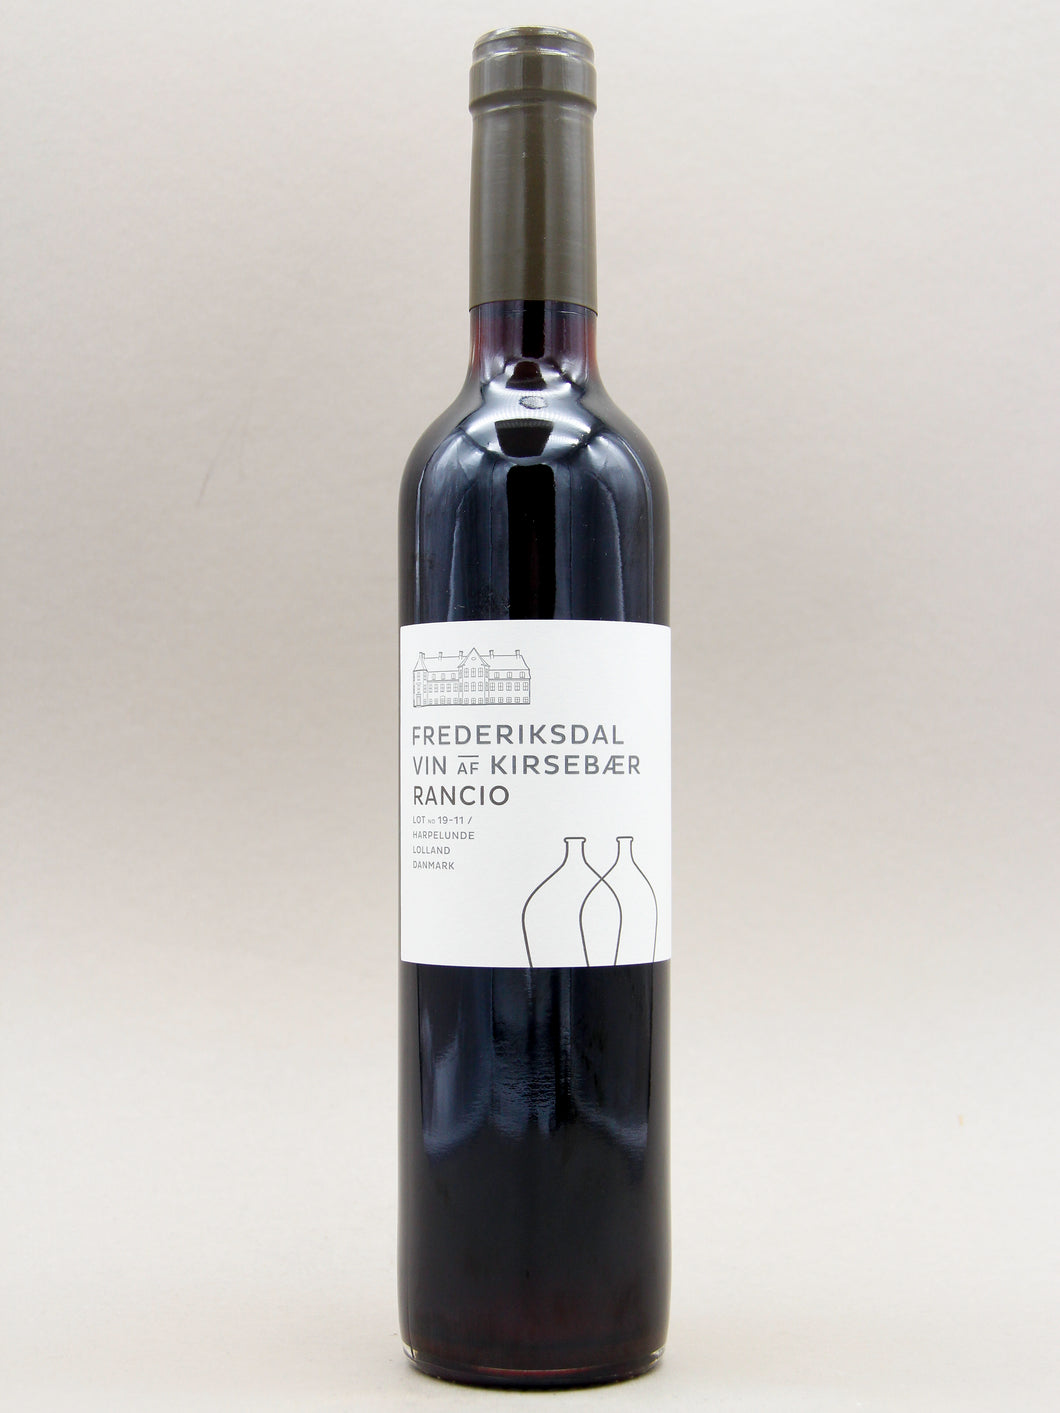 Frederiksdal, Rancio, Organic Cherry Wine, Lot-19-11, Denmark (15%, 50cl)